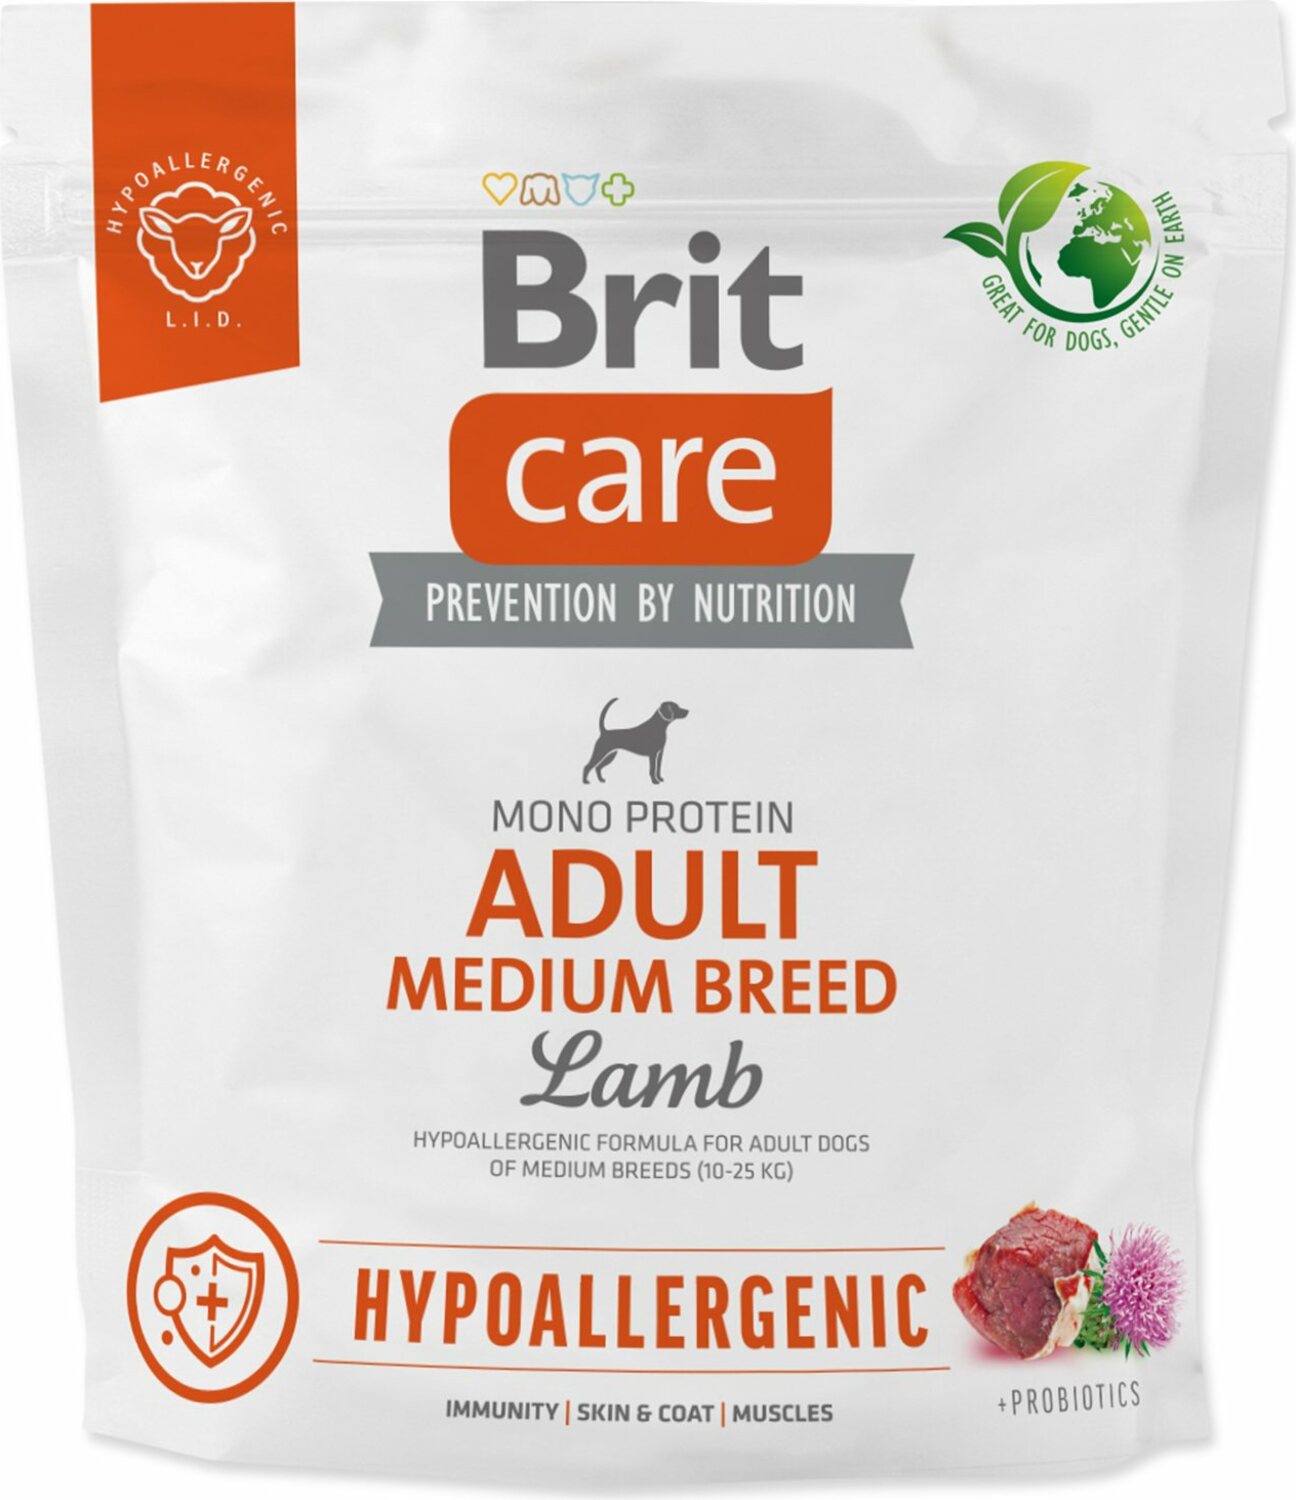 Krmivo Brit Care Dog Hypoallergenic Adult Medium Breed Lamb 1kg